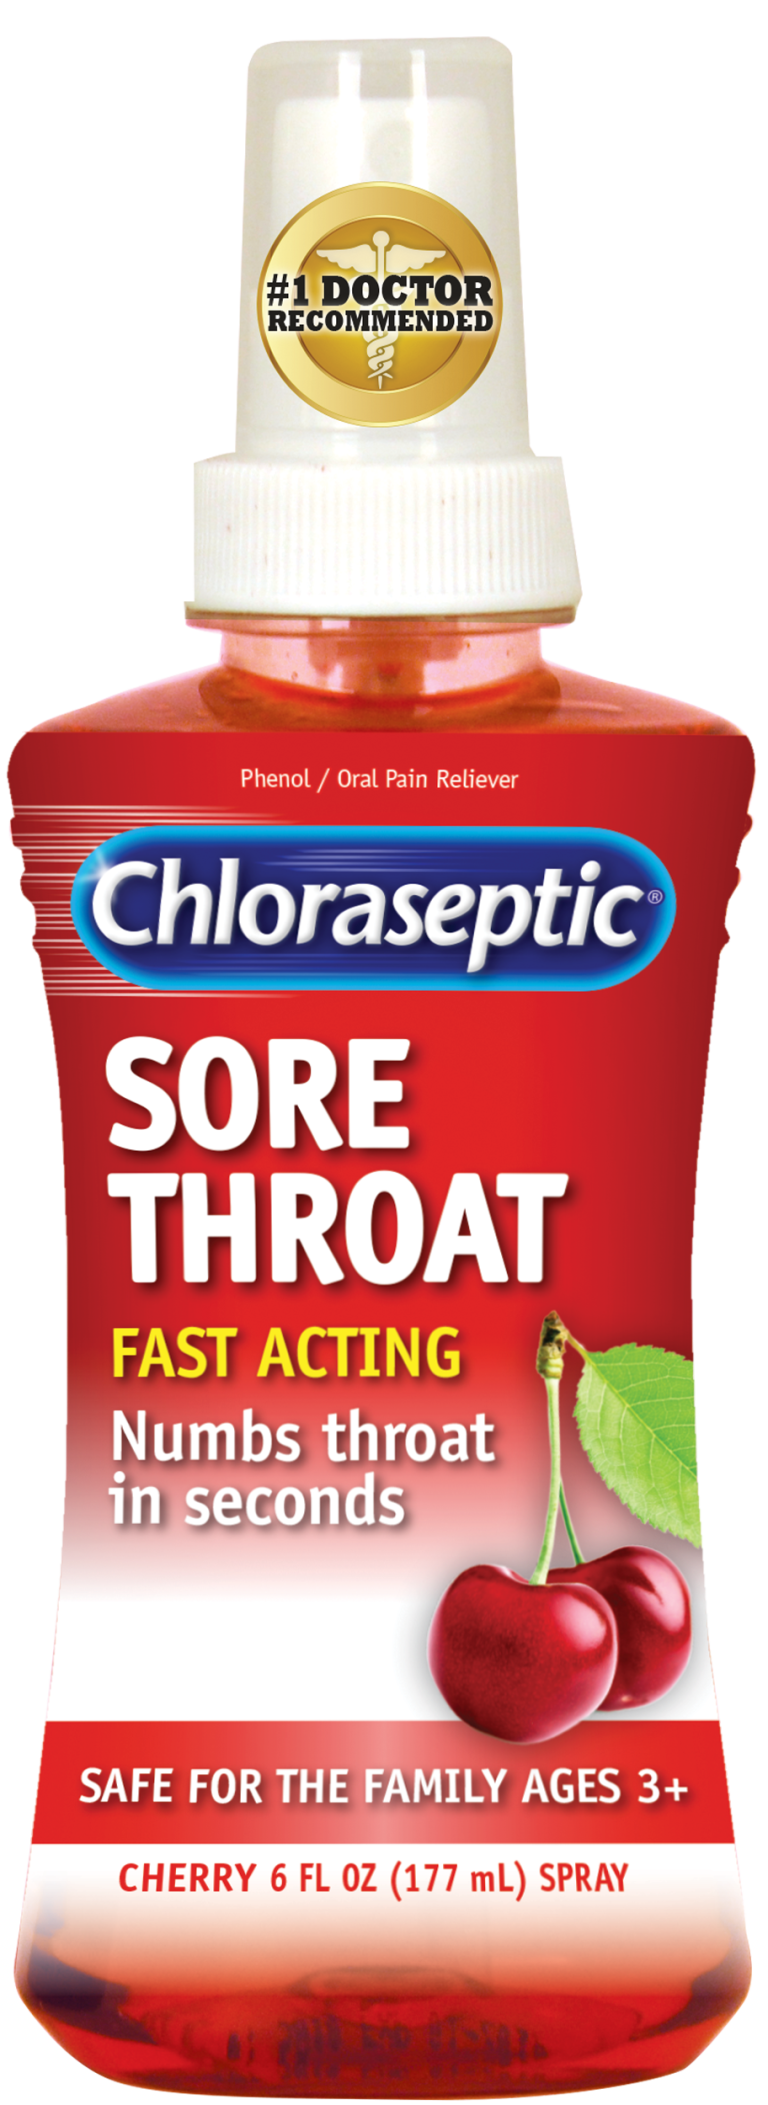 Chloraseptic Cherry Spray